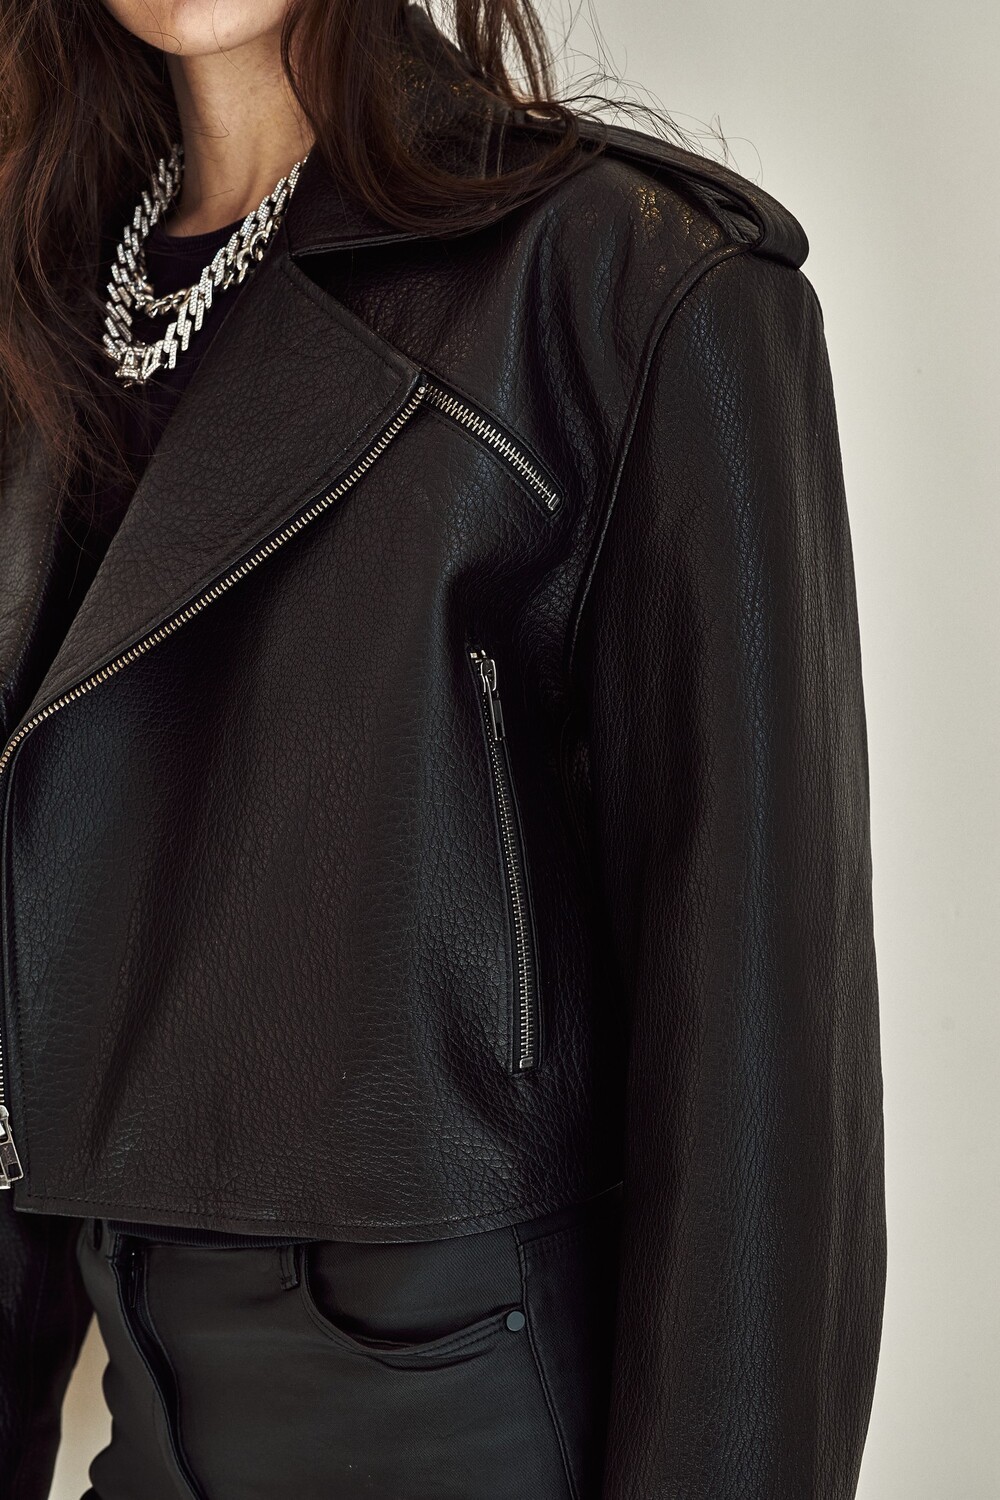 Genuine leather jacket